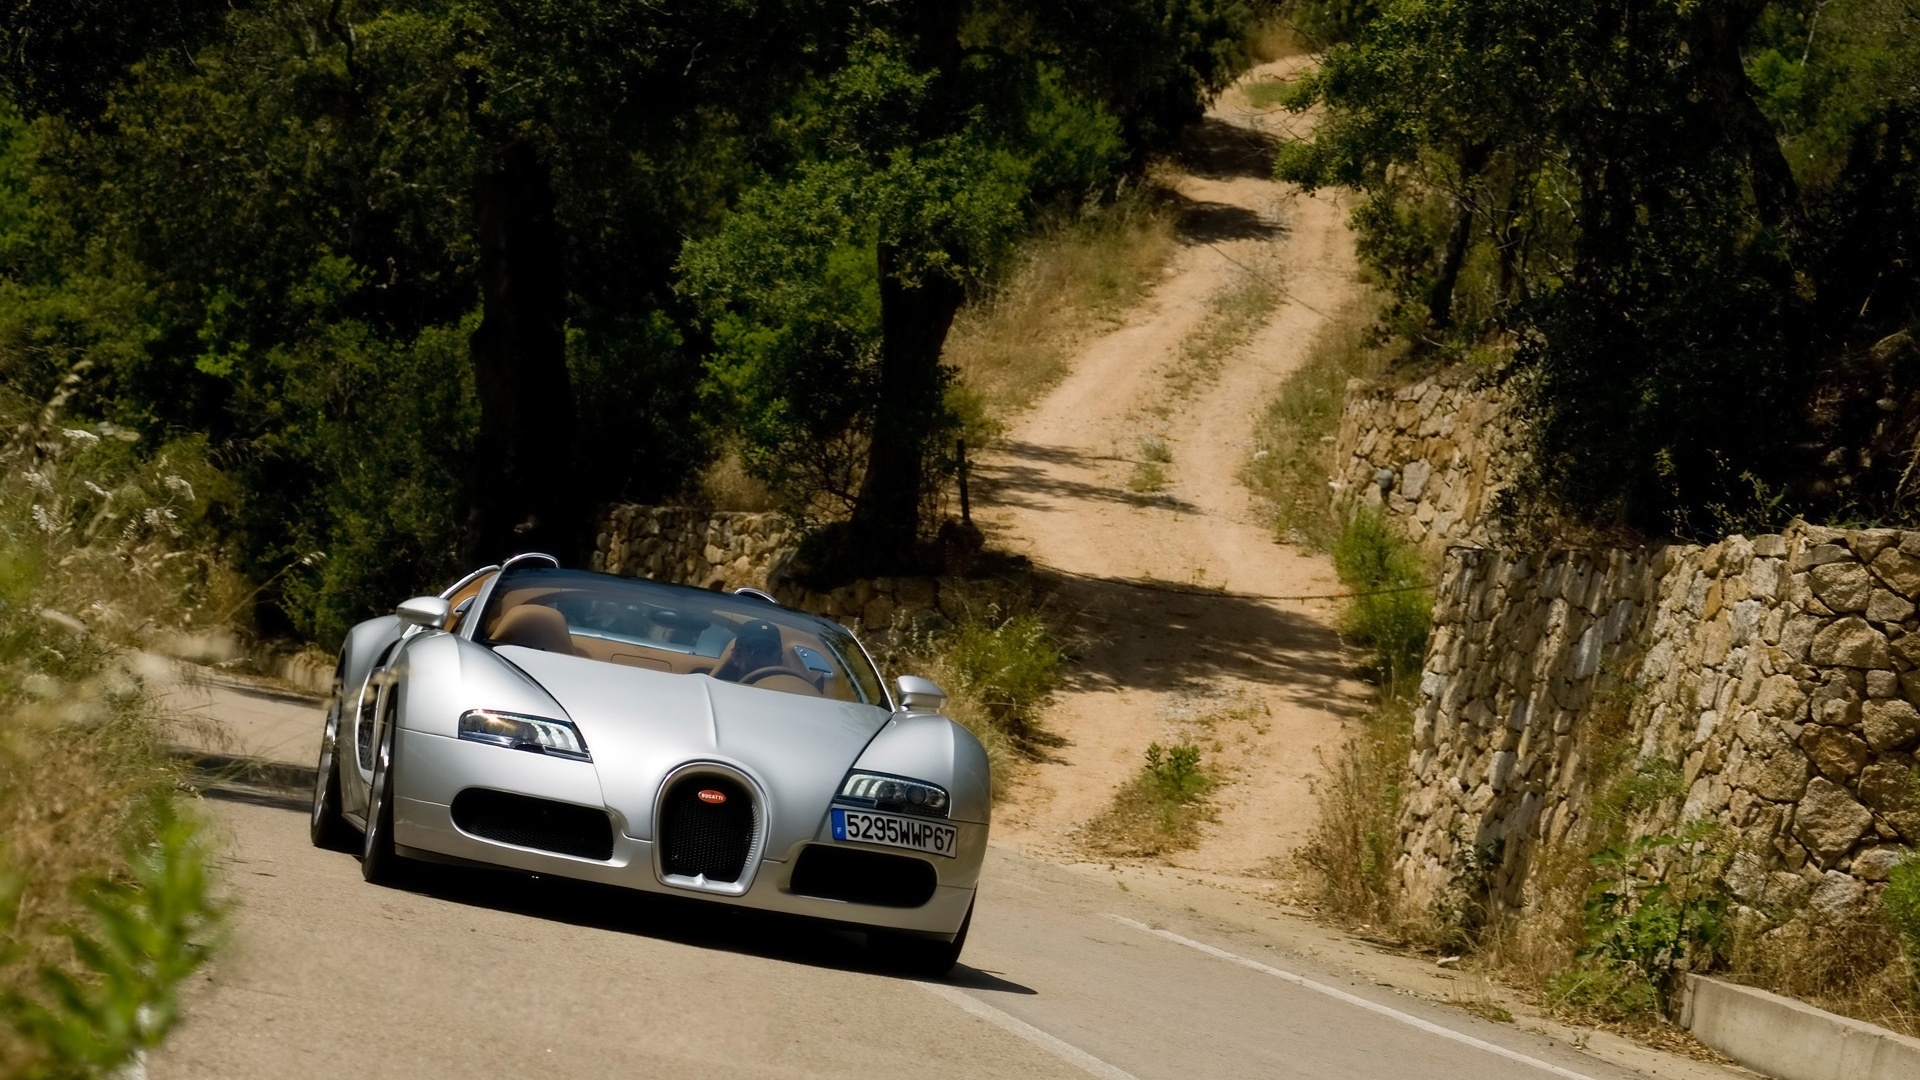 Bugatti Veyron 16.4 Grand Sport 2010 in Sardinia - Front Angle Drive Tilt for 1920 x 1080 HDTV 1080p resolution